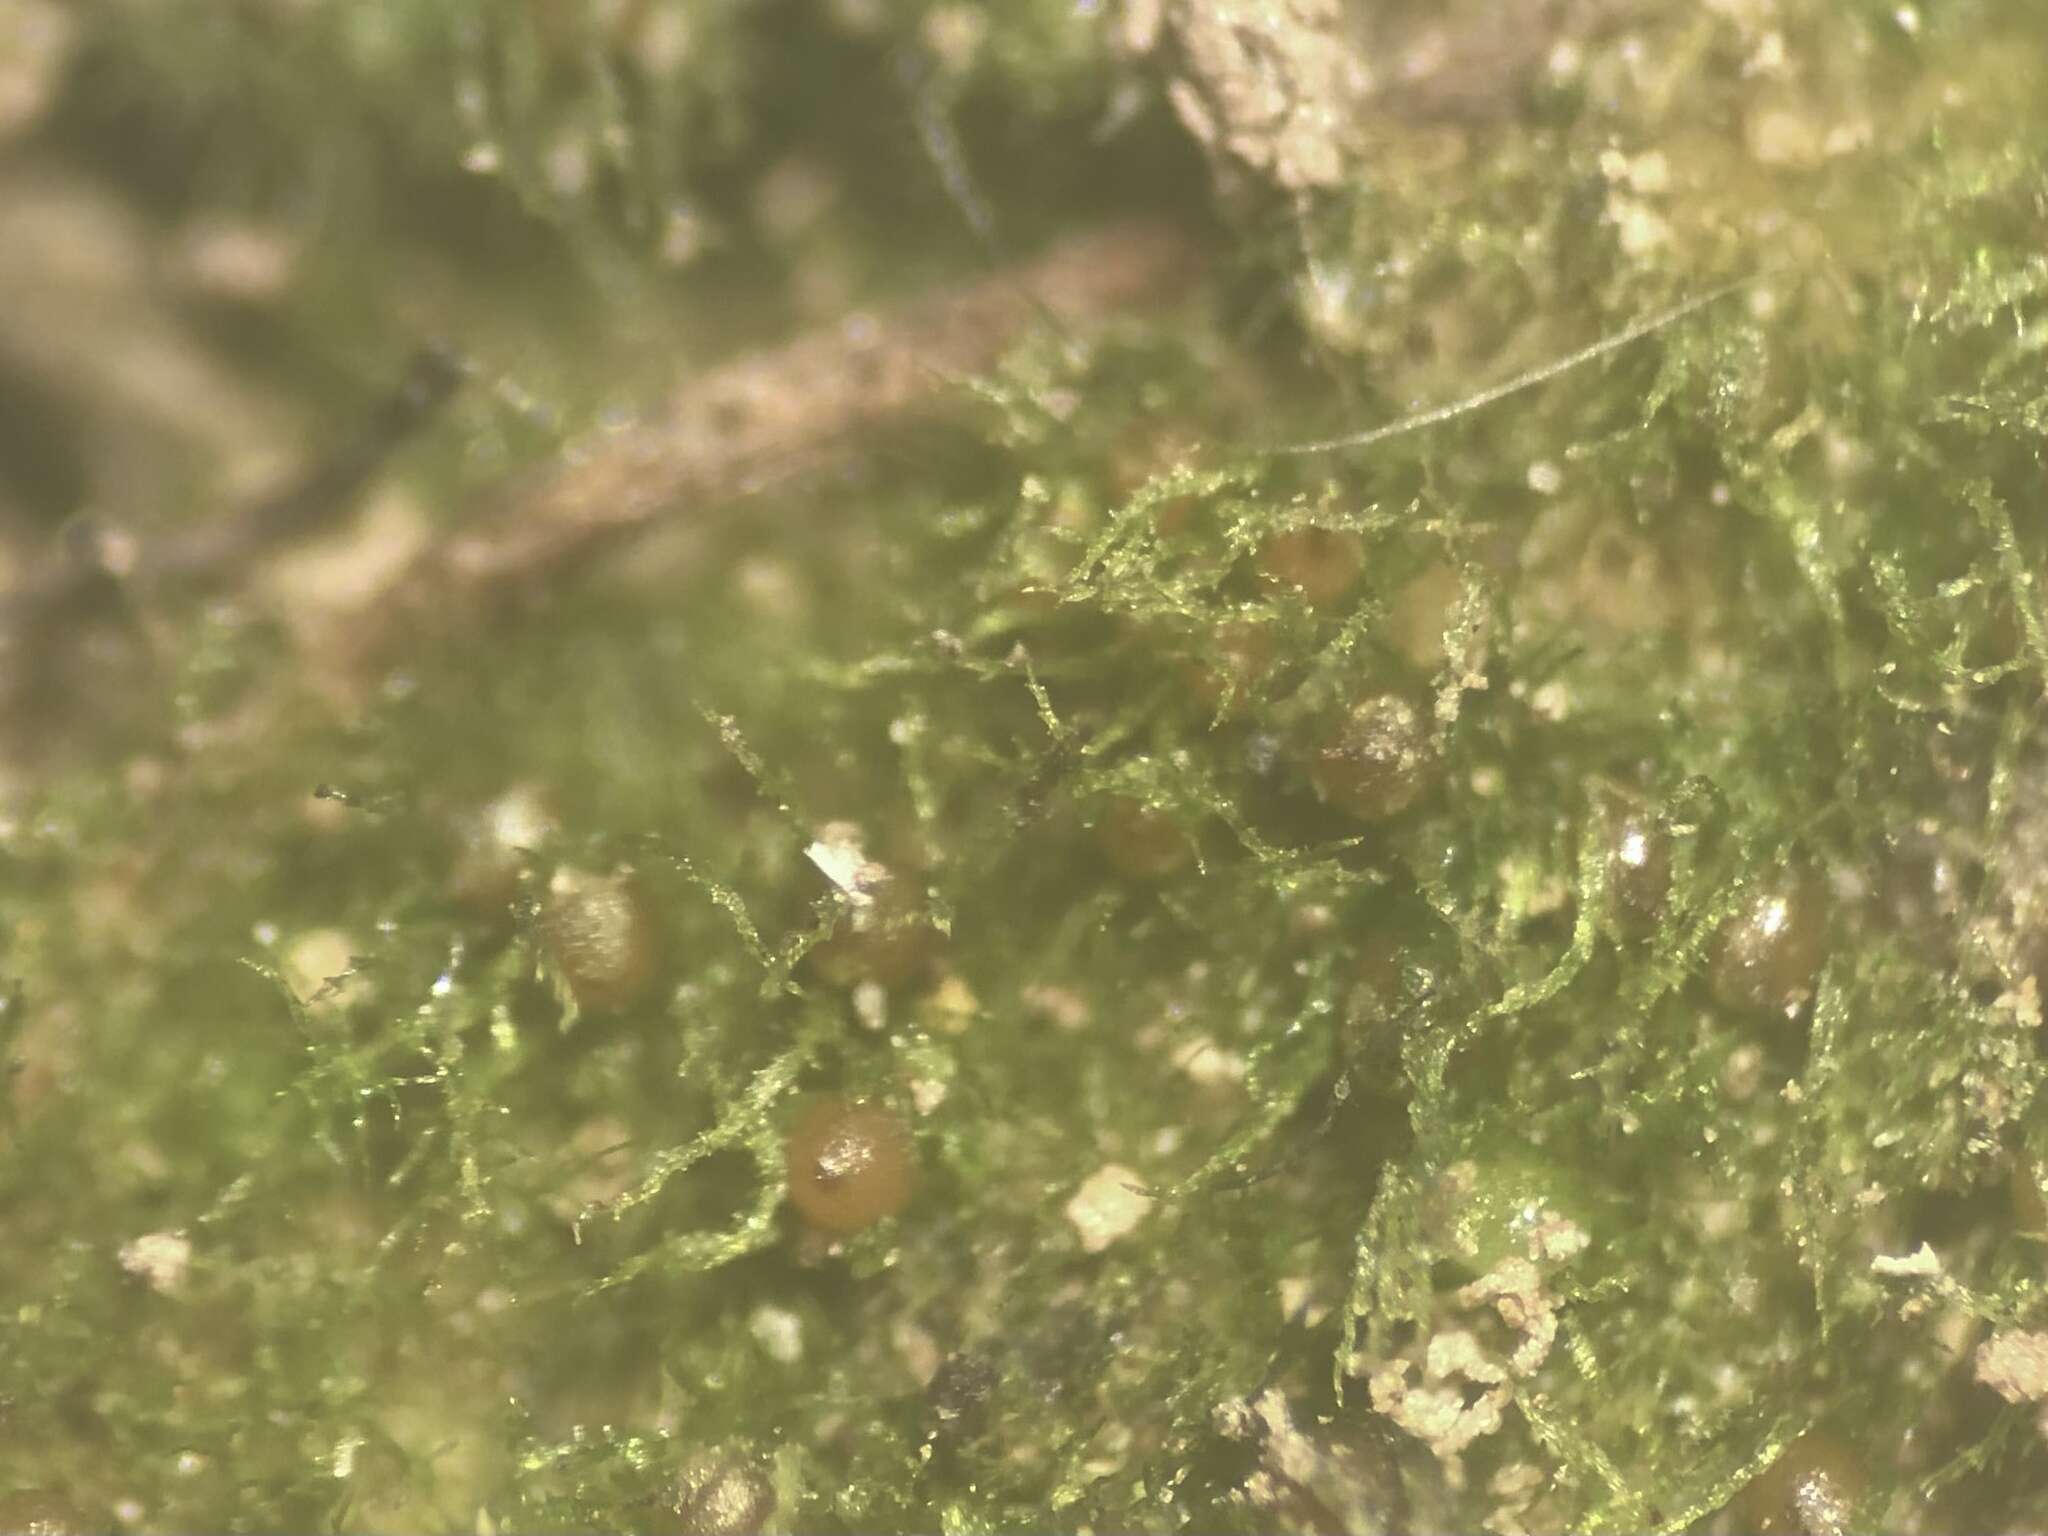 Image of ephemerum moss